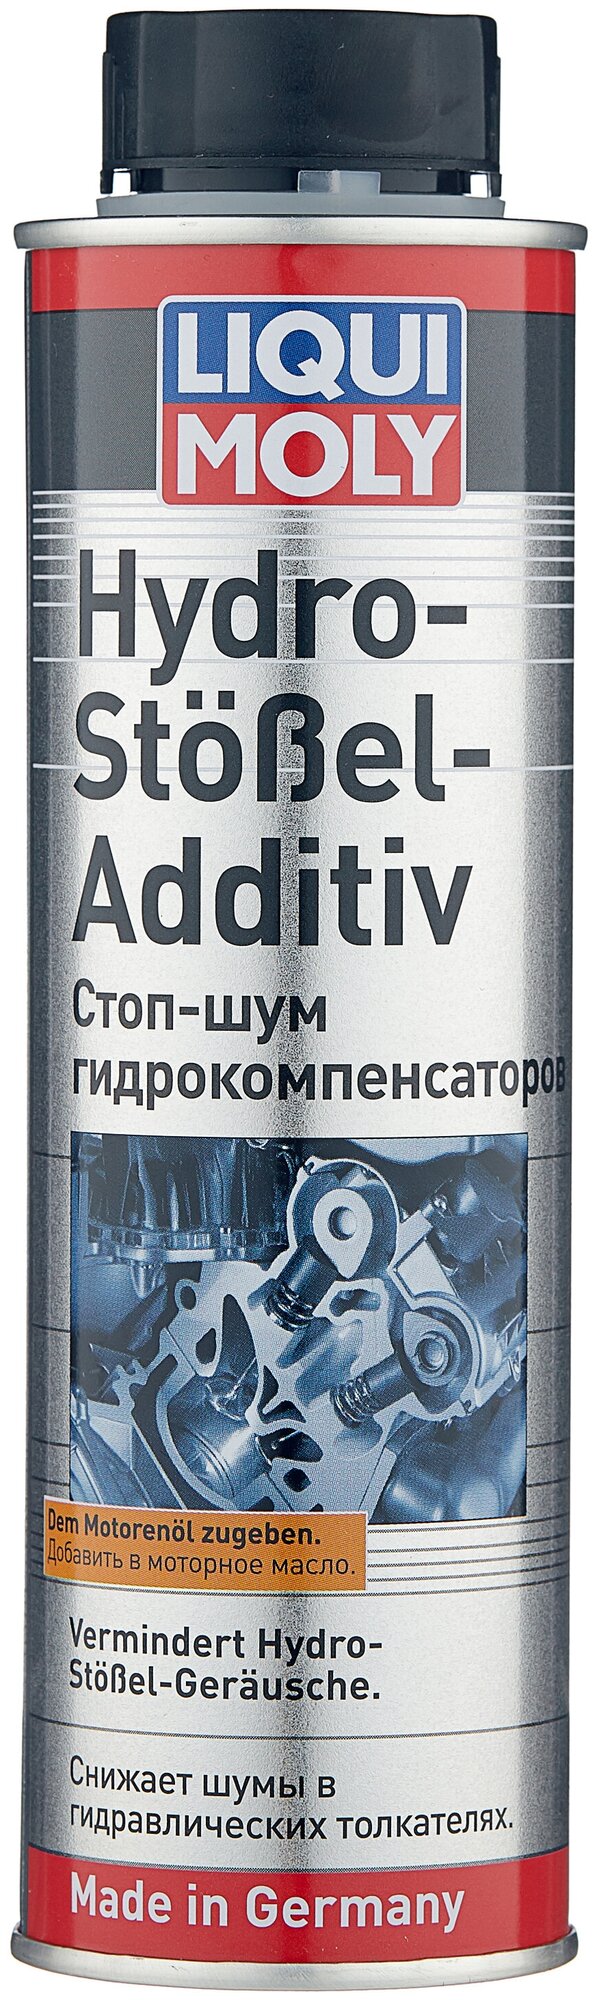 LIQUI MOLY Hydro-Stossel-Additiv